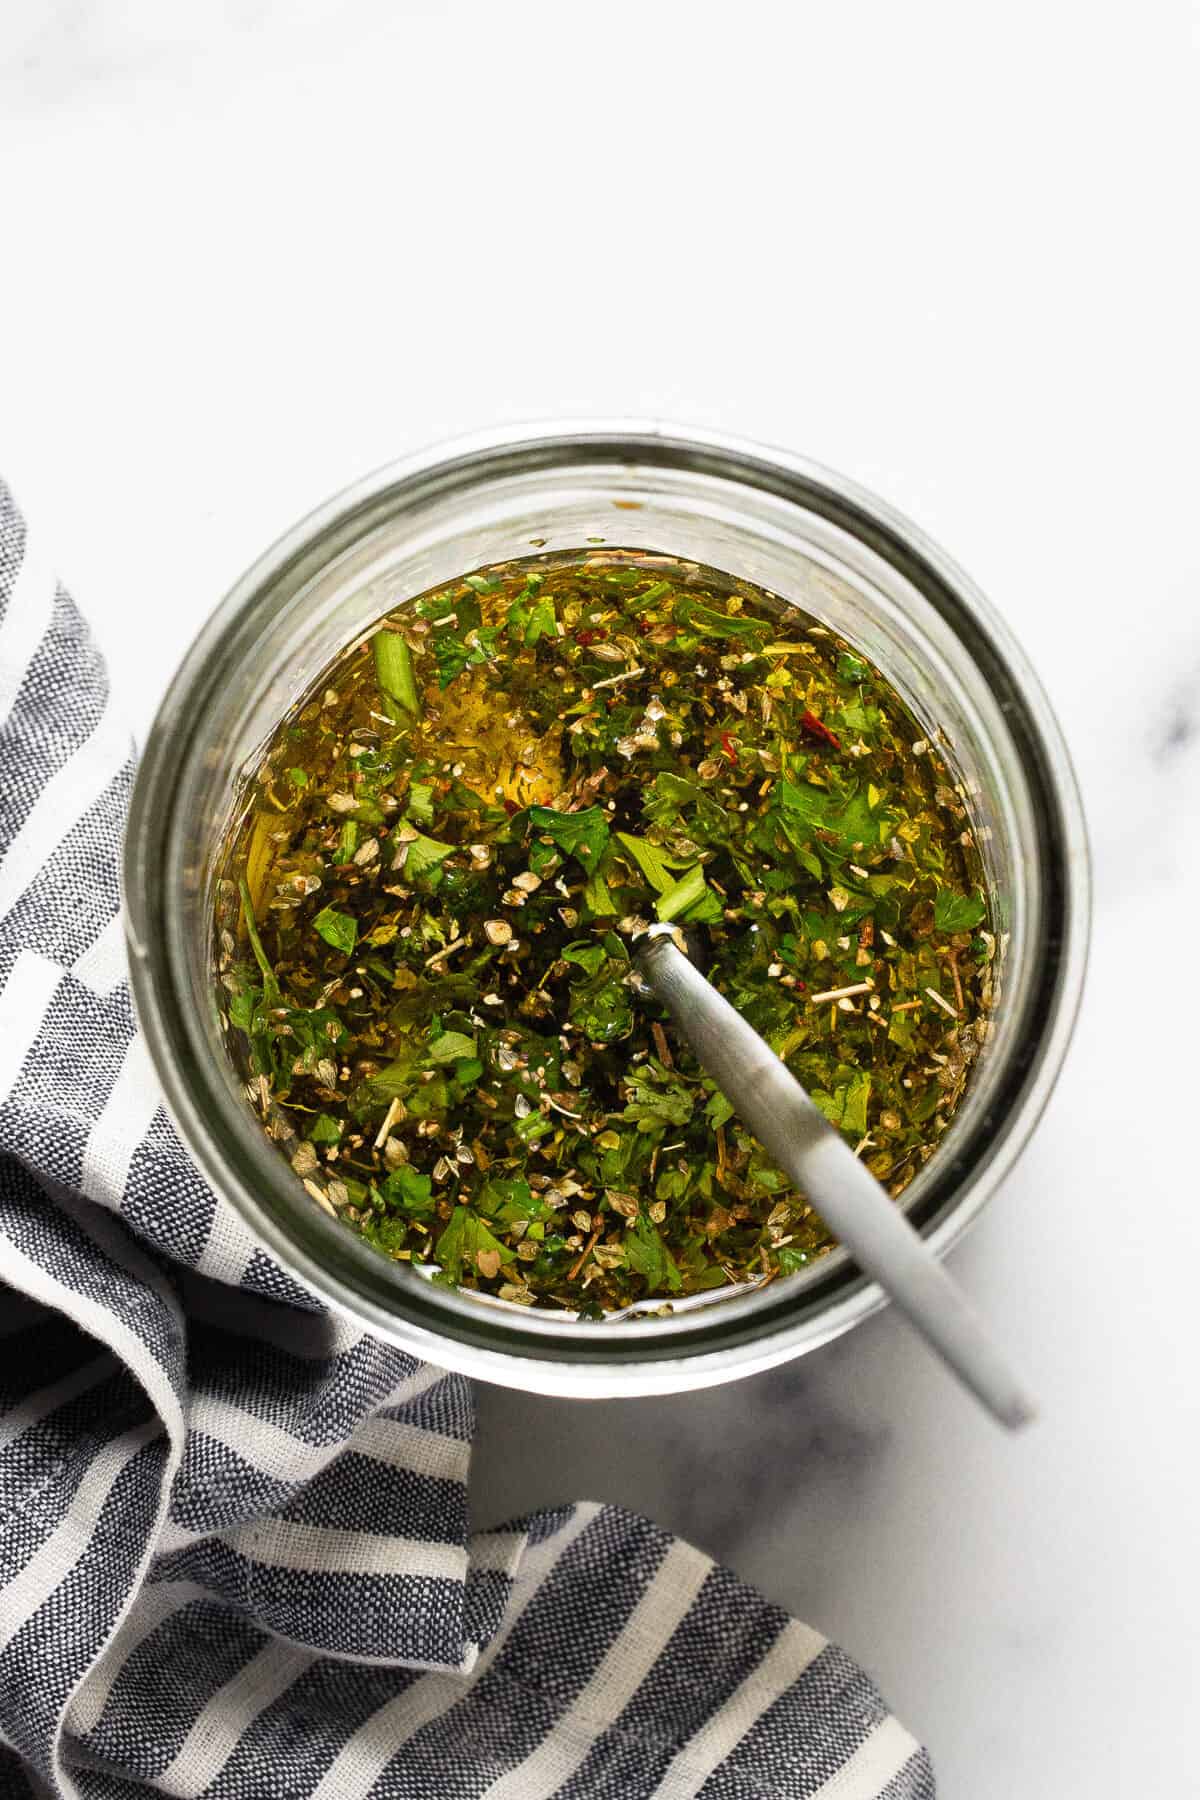 Mason jar filled with an herby feta marinade